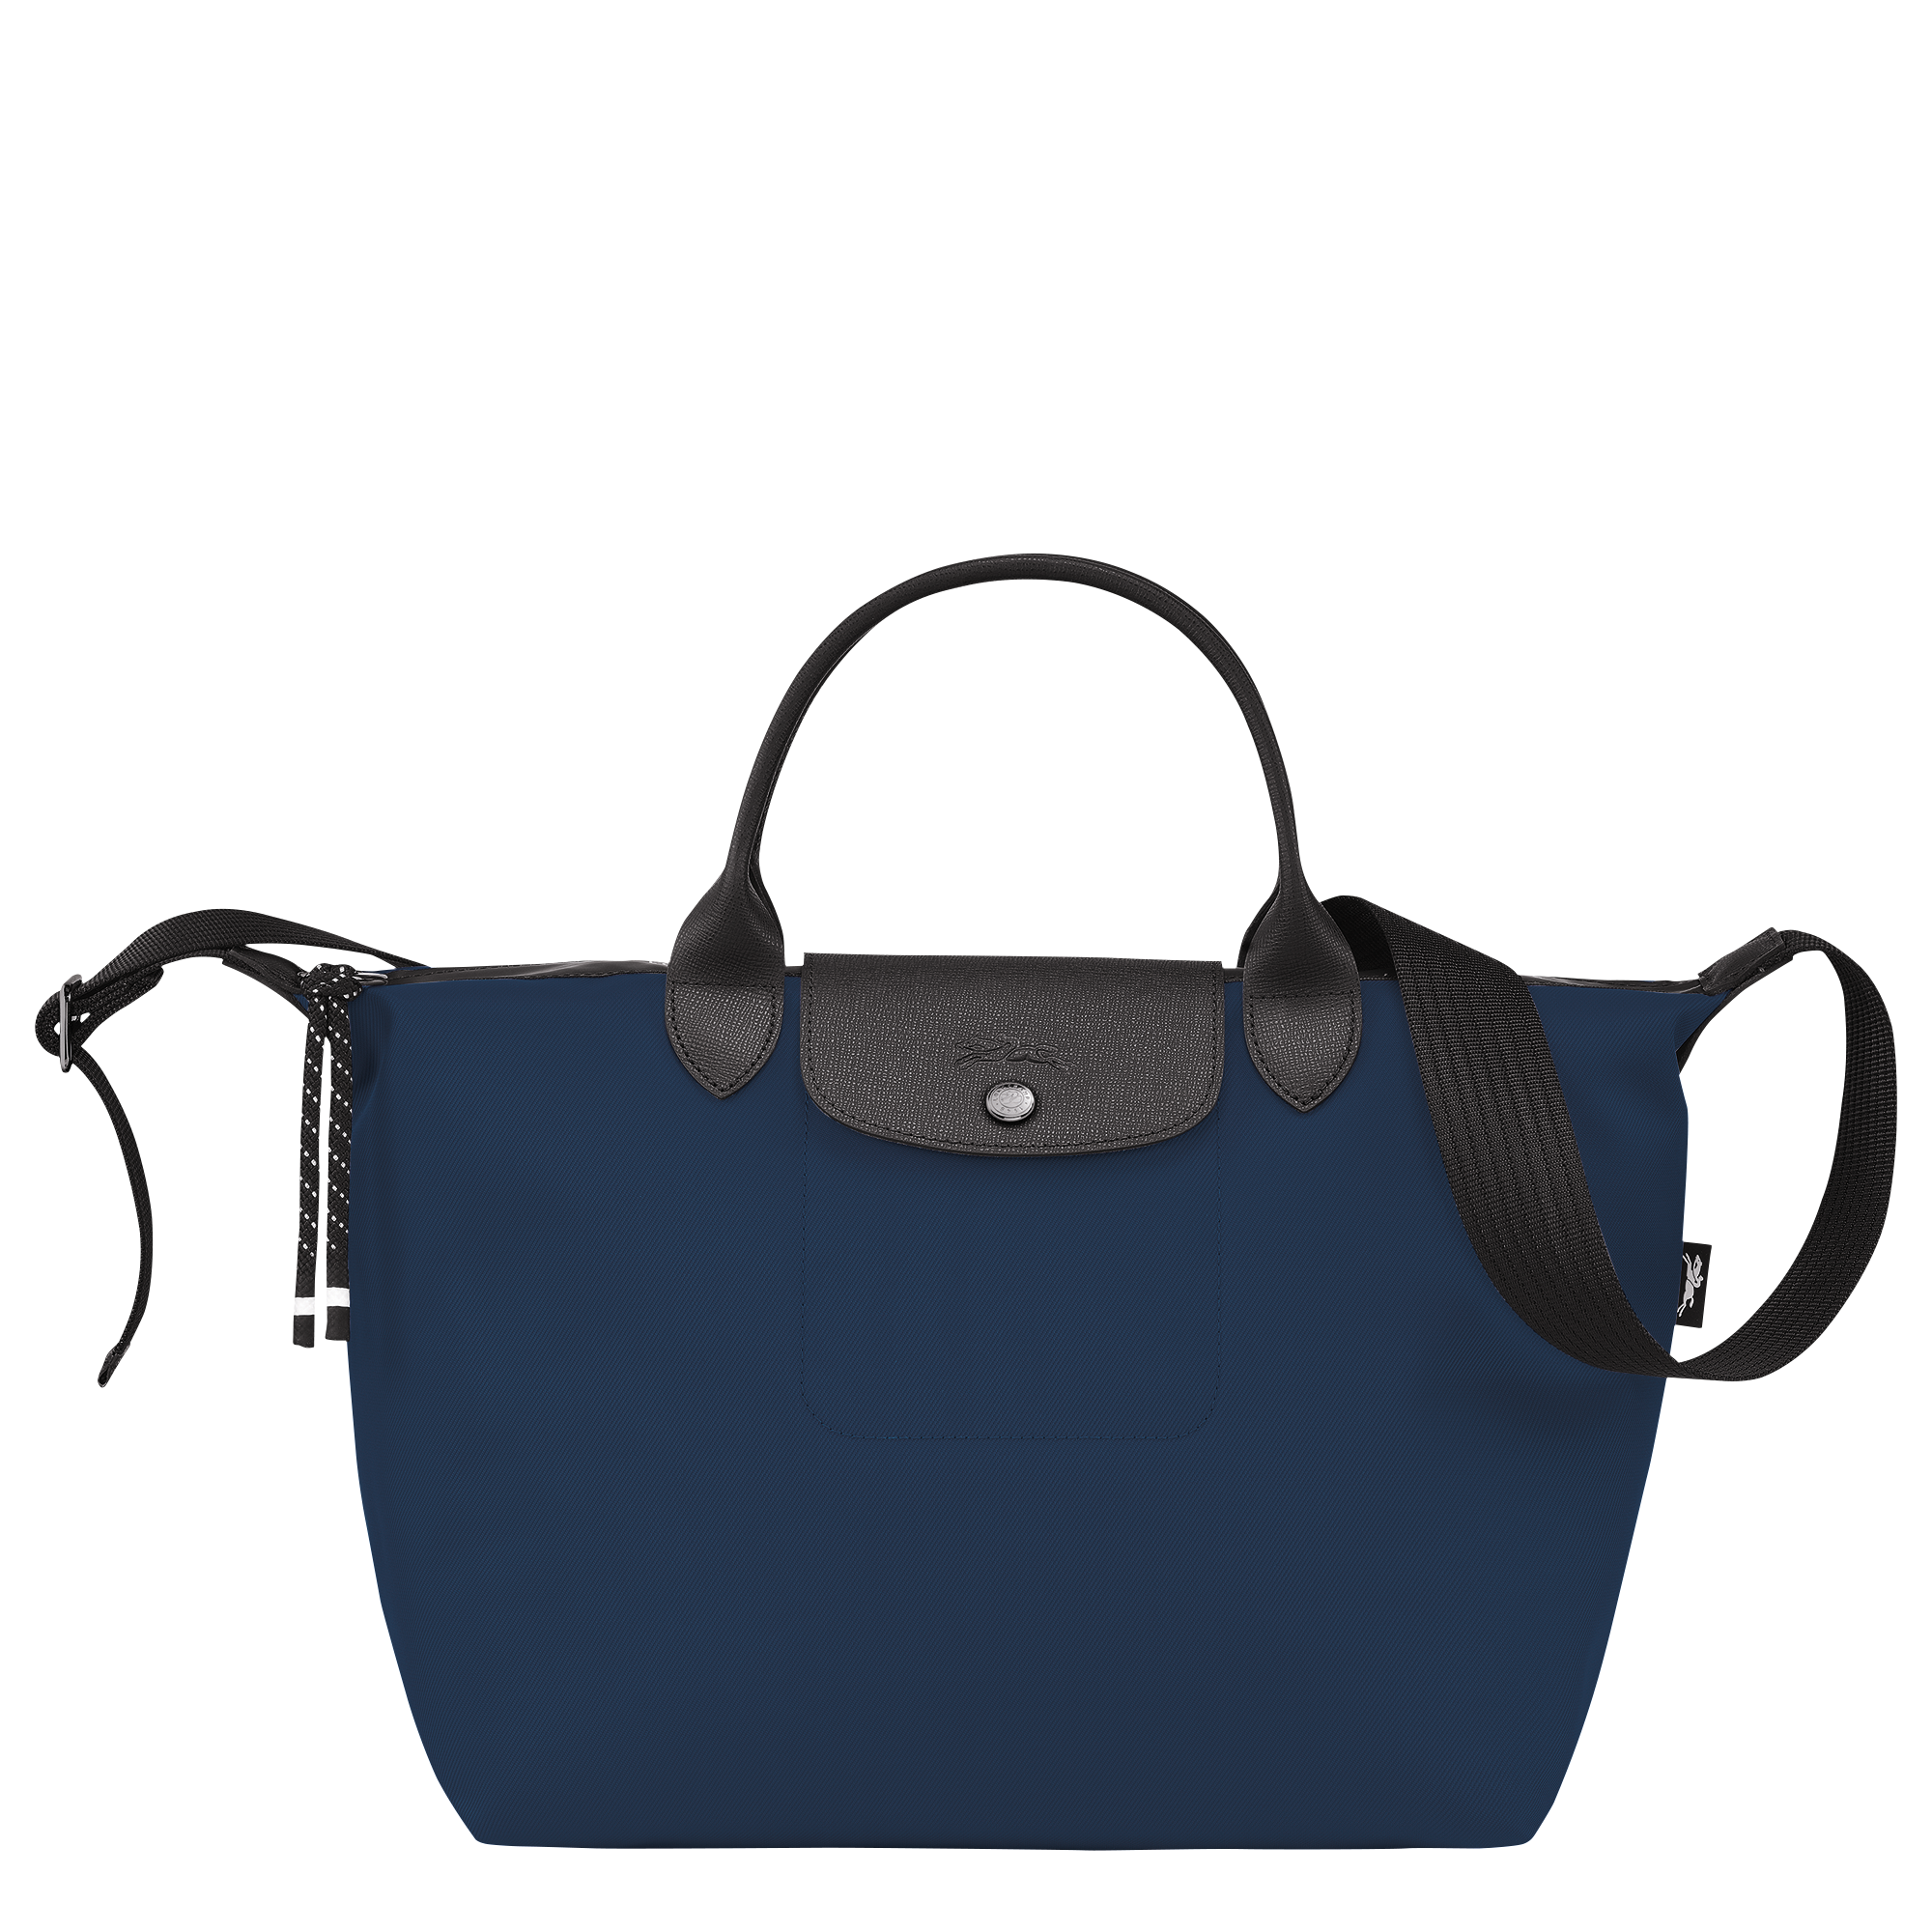 Handbags For Women - Buy Handbags For Women Online Starting at Just ₹149 |  Meesho